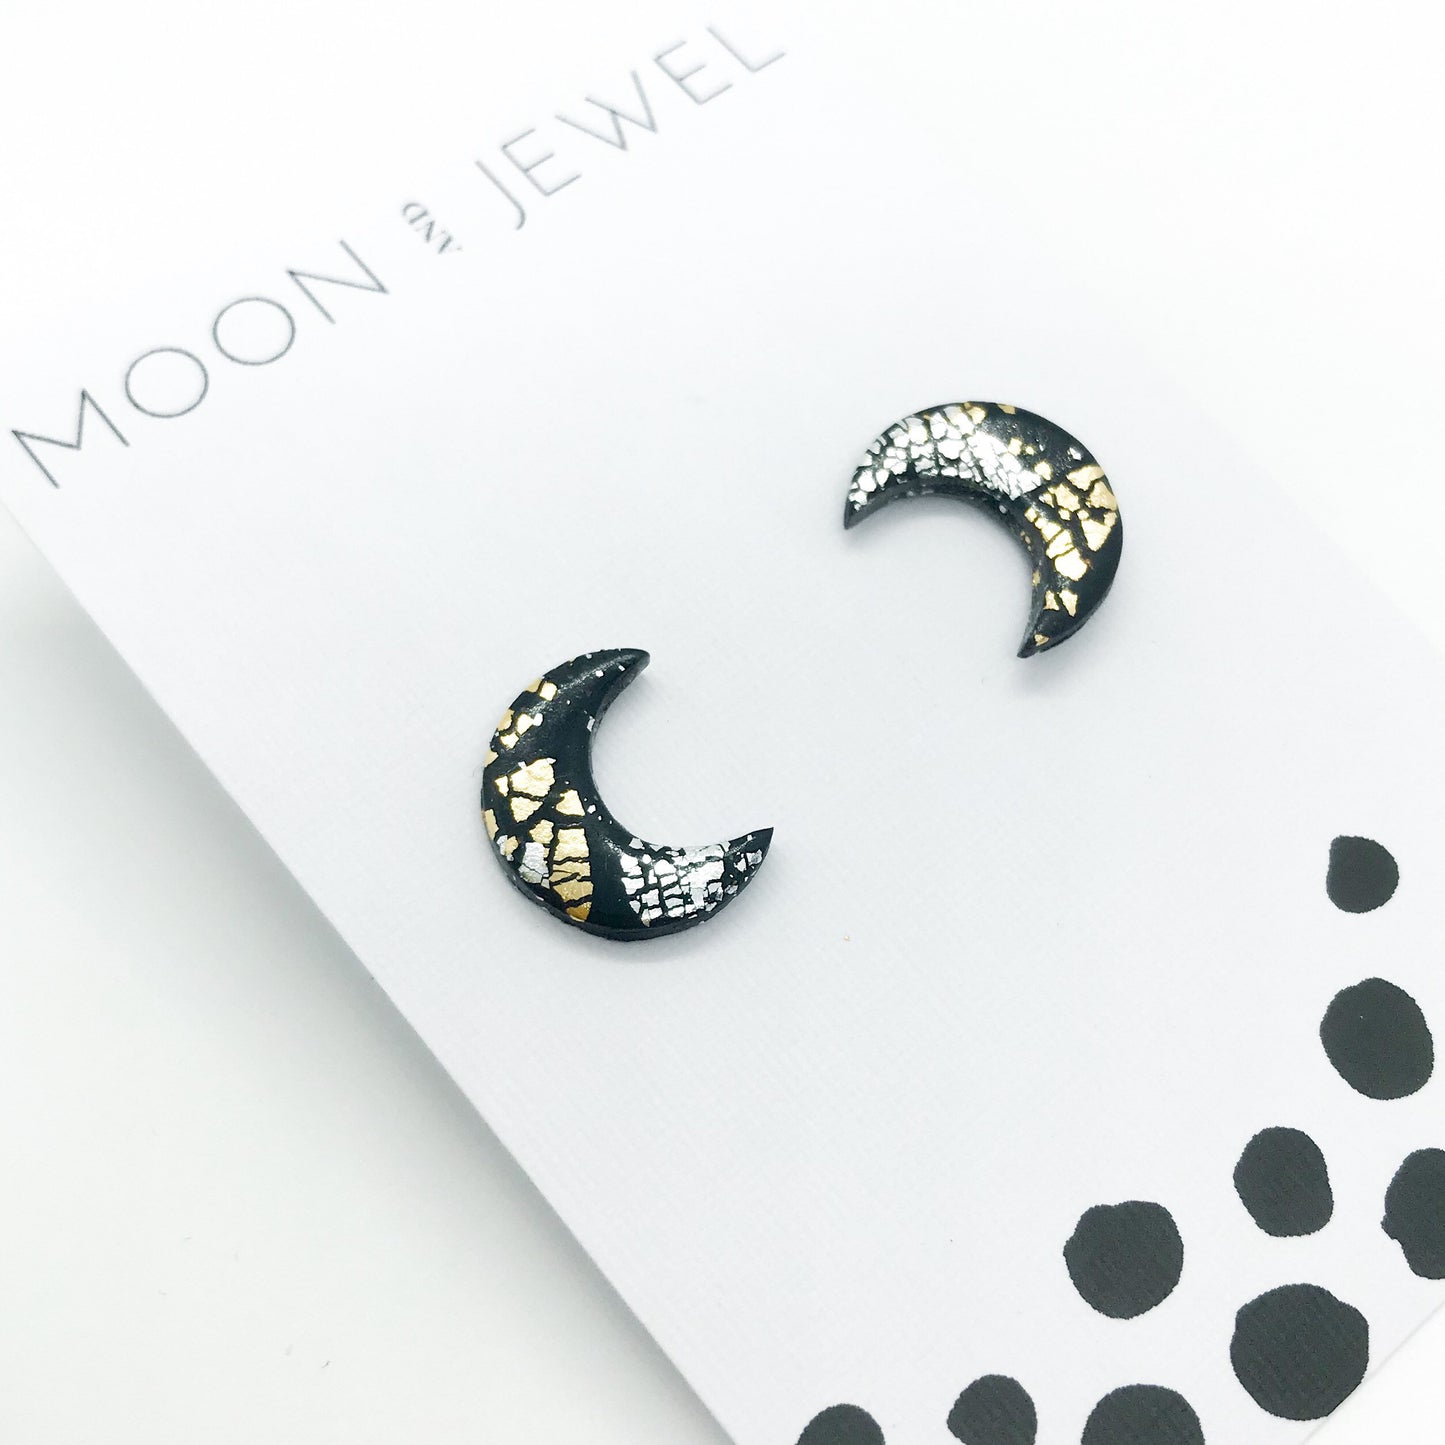 Moon earrings, polymer clay moon studs, handmade earrings, beautiful gift for her, birthday gift, secret Santa gift